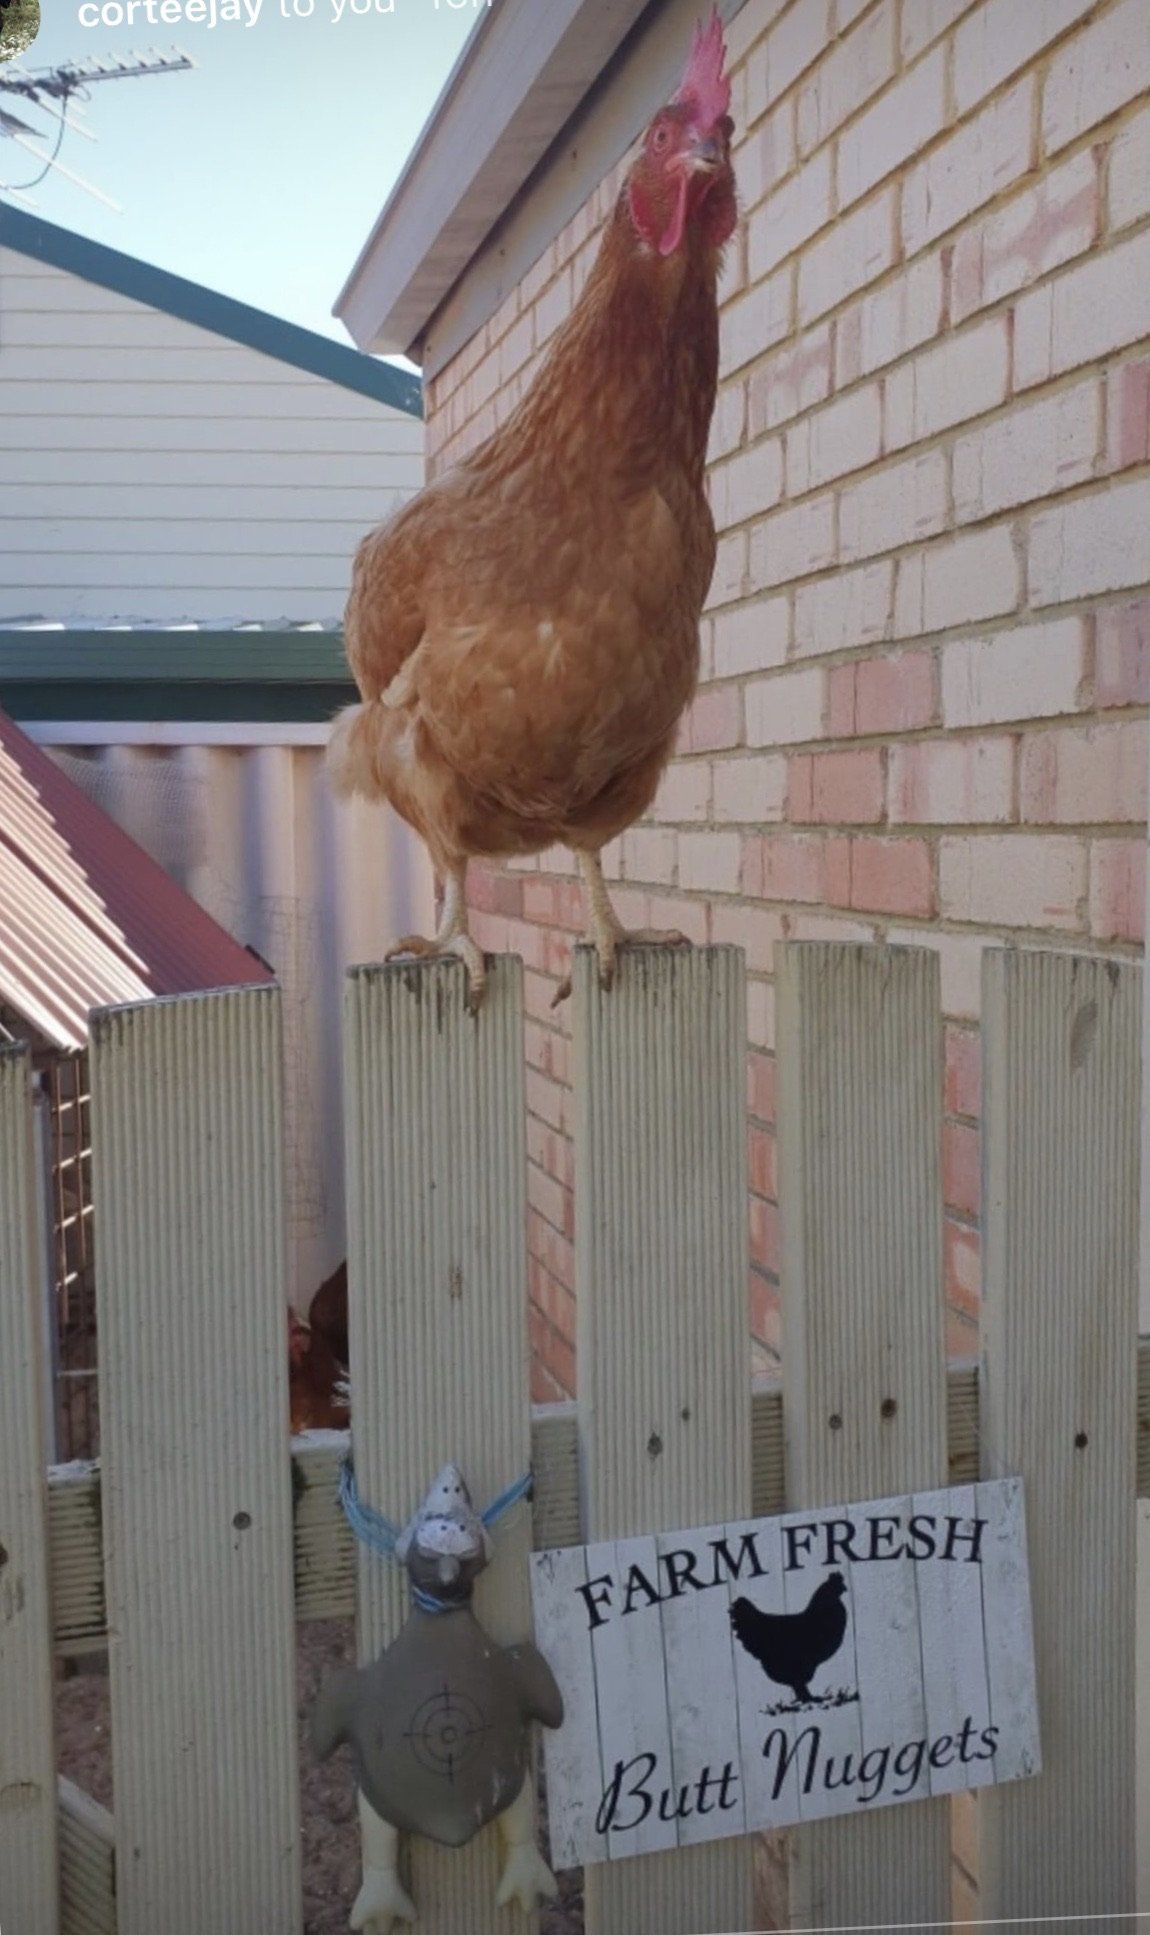 Farm Fresh Butt Nuggets Chicken Sign